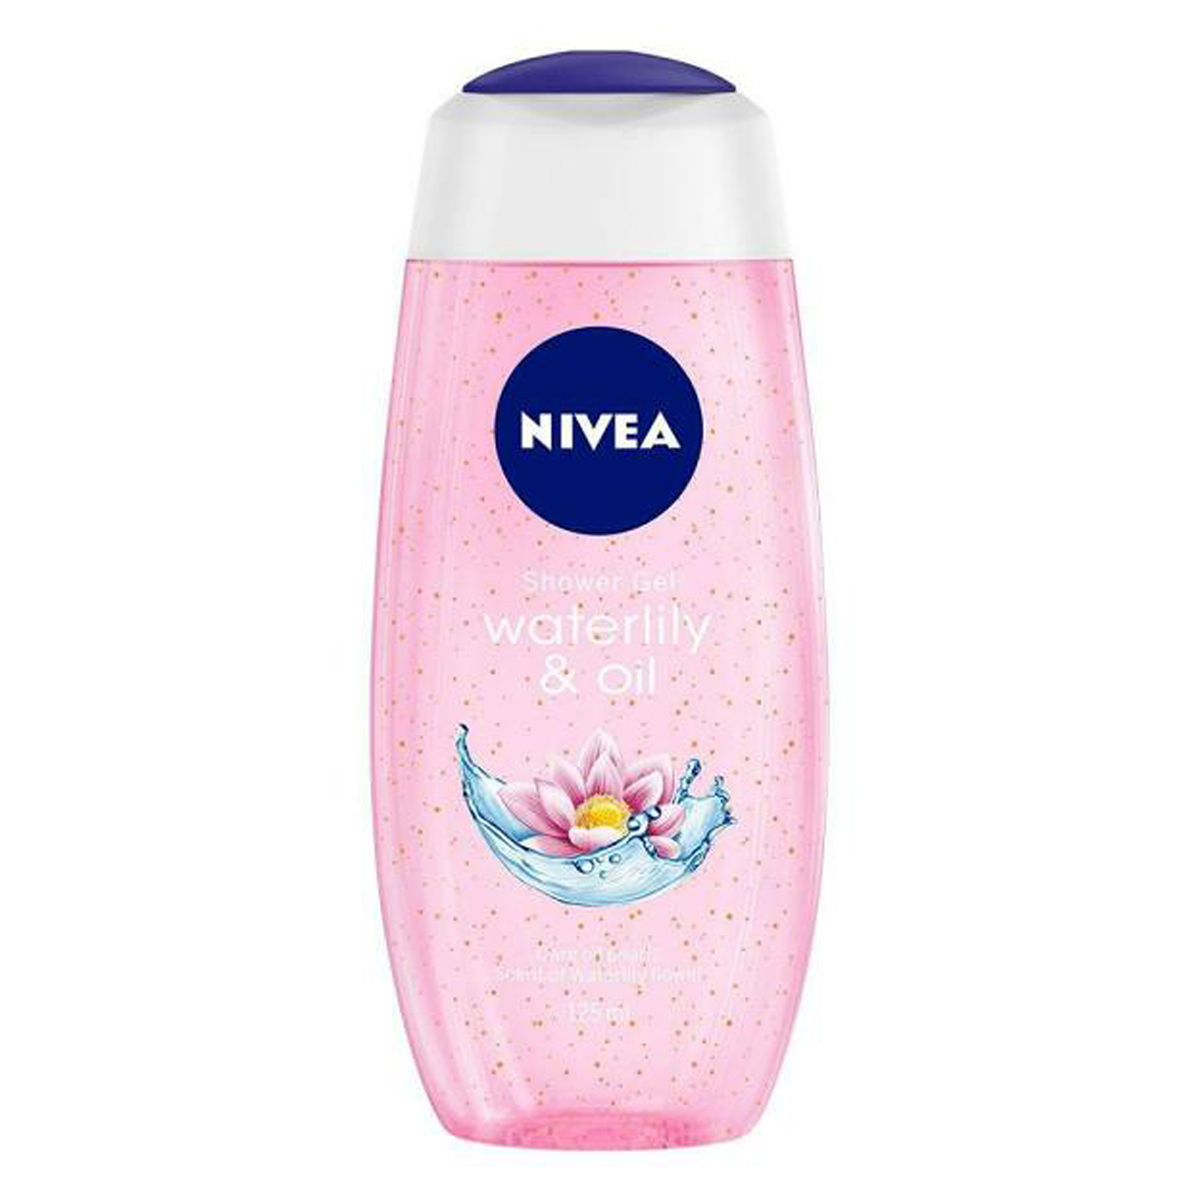 Buy Nivea Waterlily & Oil Shower Gel, 125 ml Online